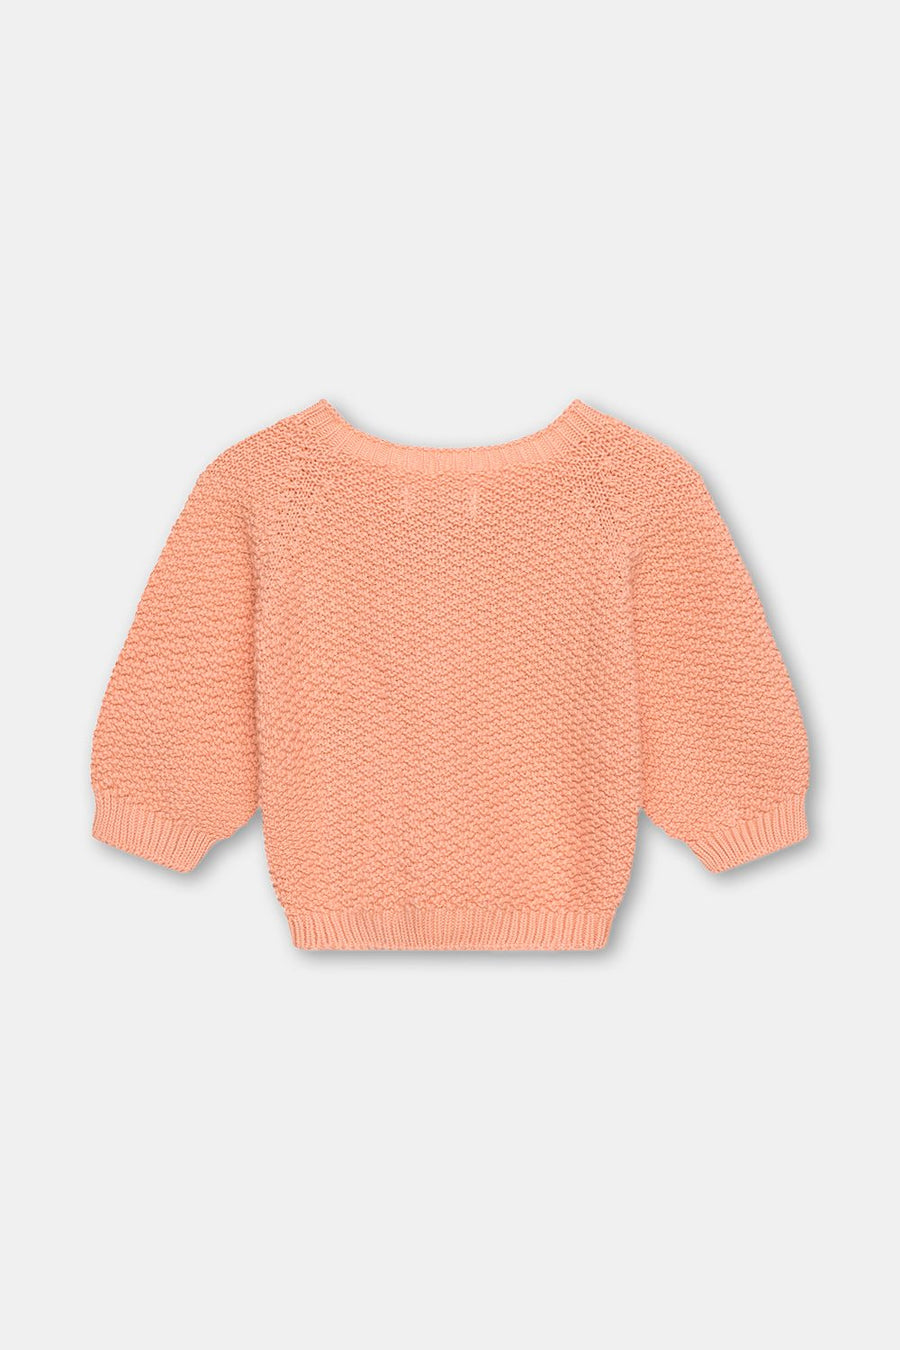 My Little cozmo - COSMOS201 - knit cardigan - peach